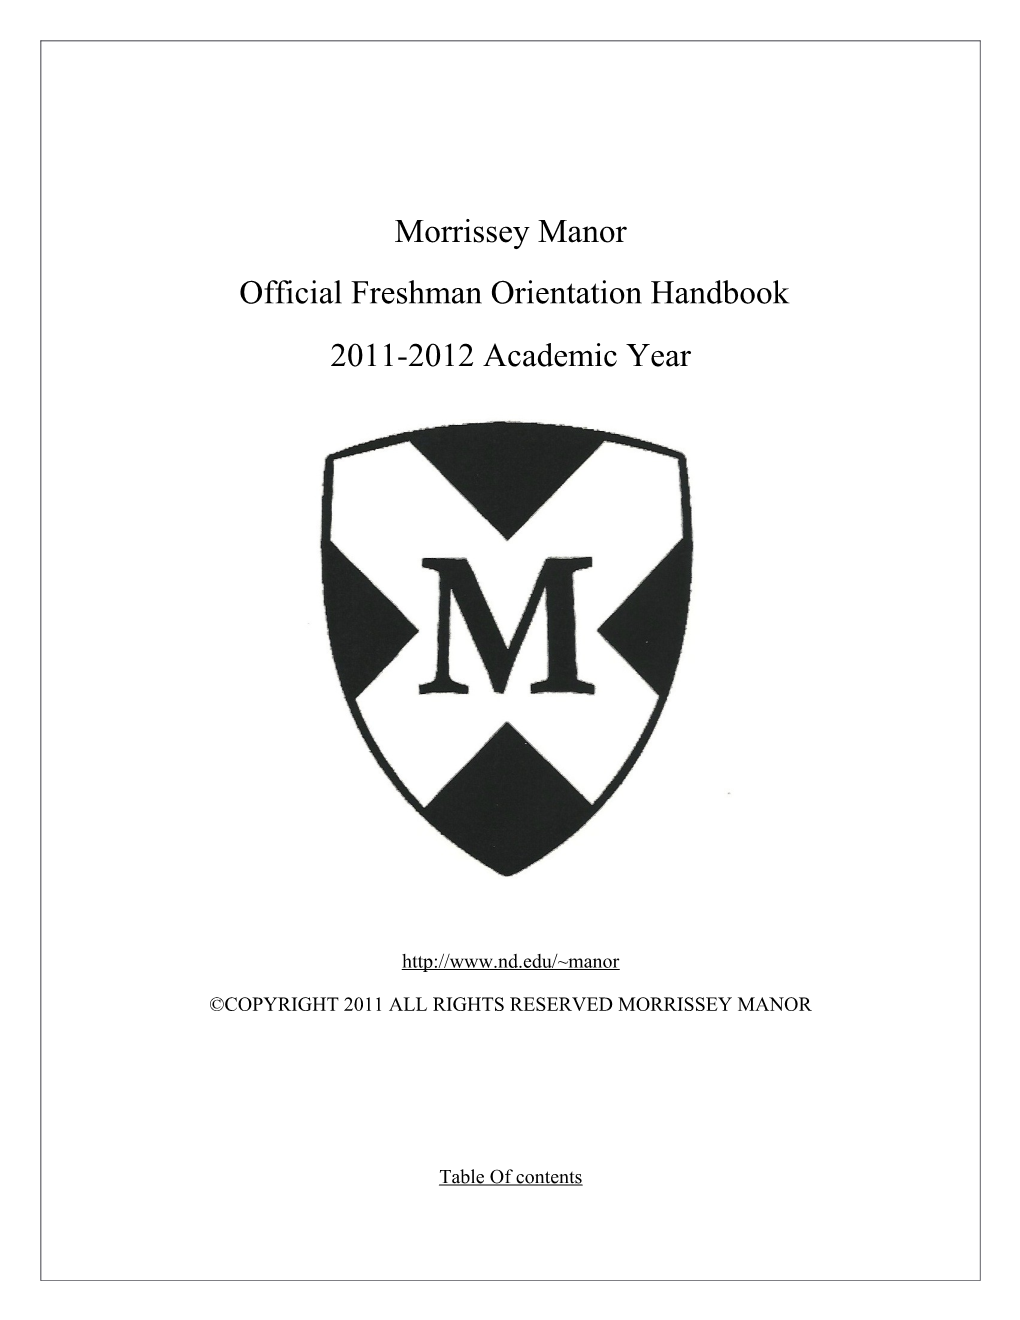 Official Freshman Orientation Handbook